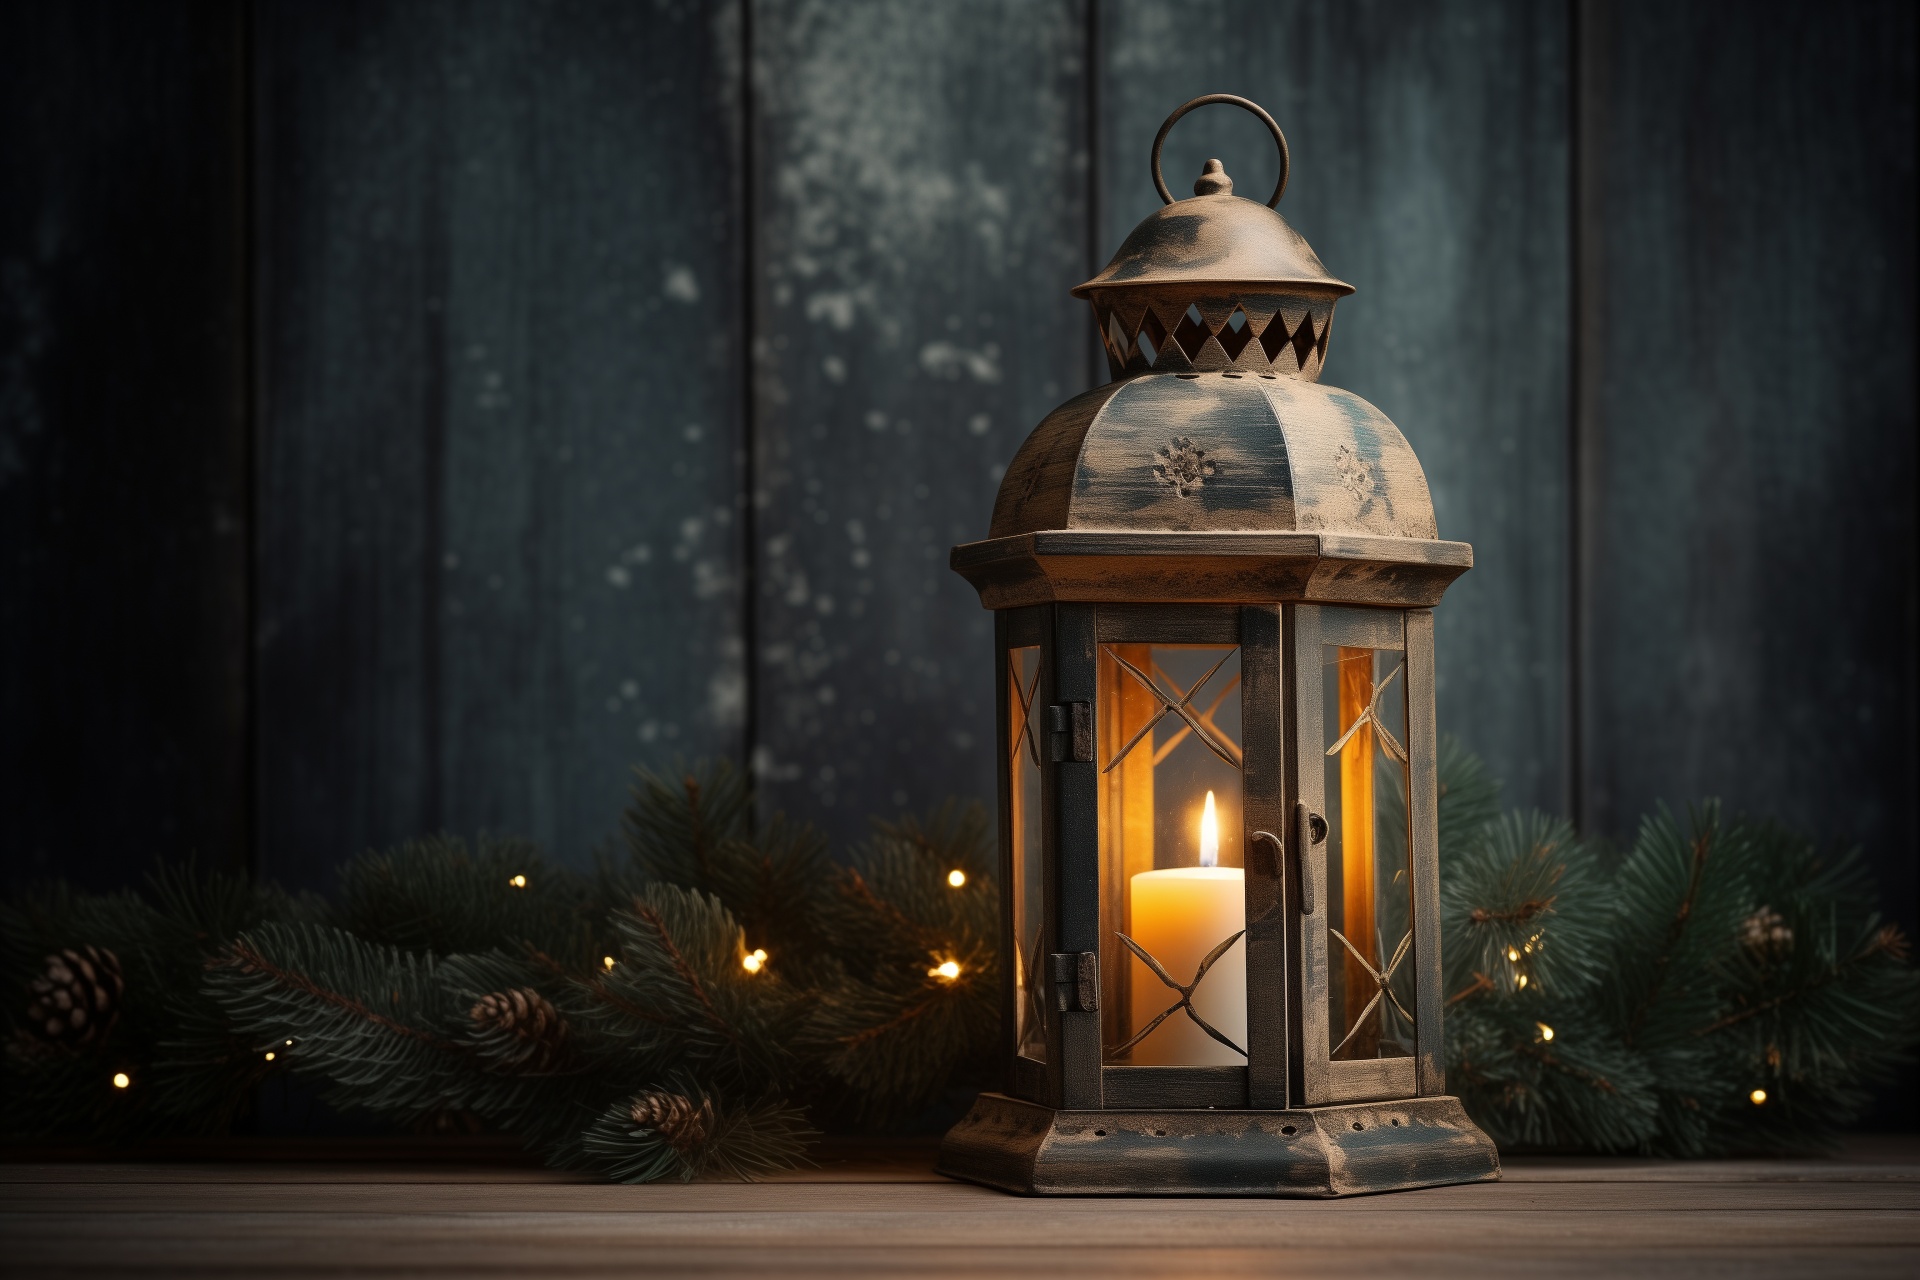 Vintage Christmas Lantern Free Stock Photo - Public Domain Pictures